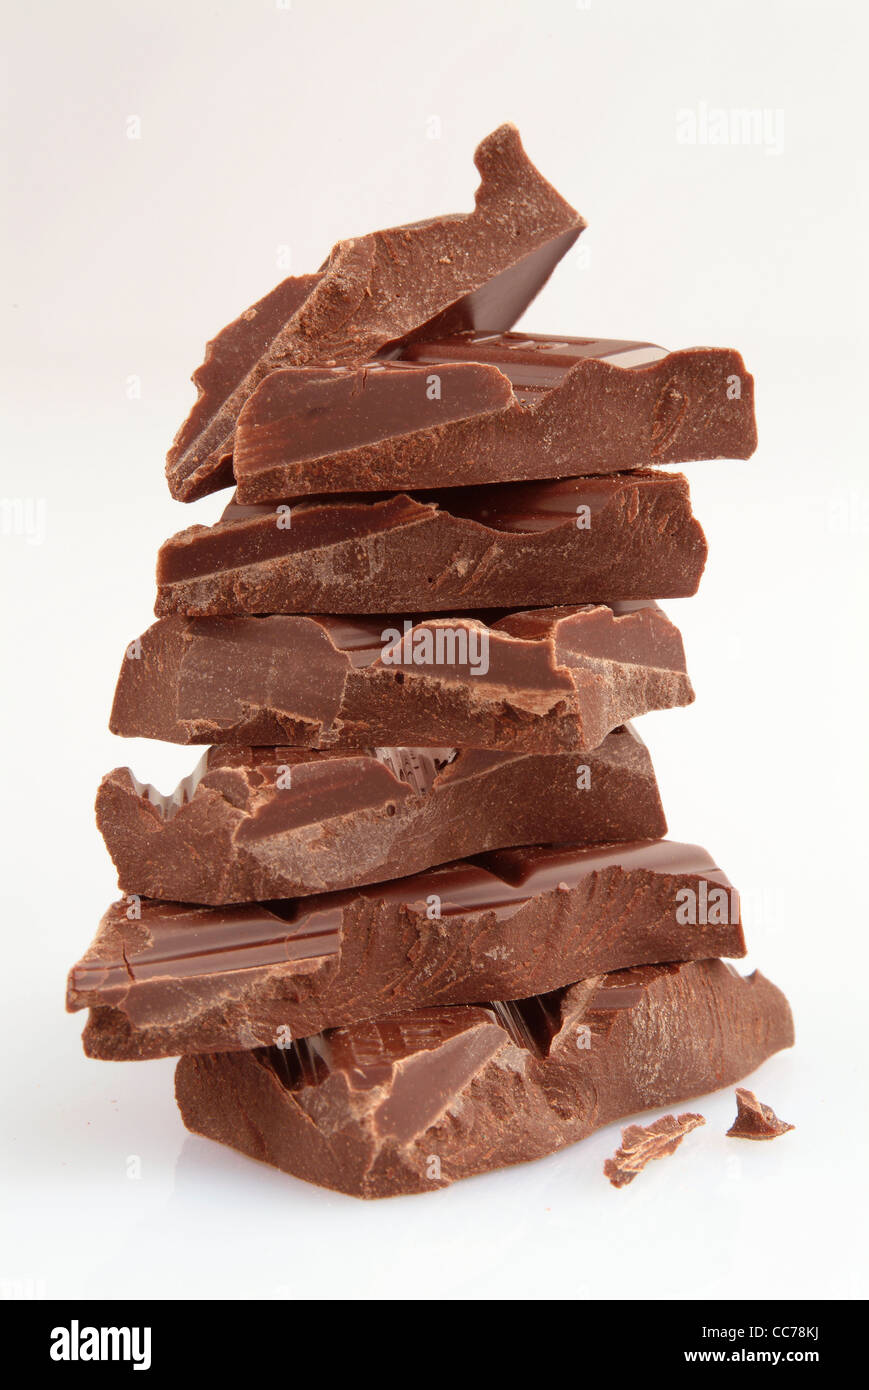 Stack of chocolate chunks Stock Photo